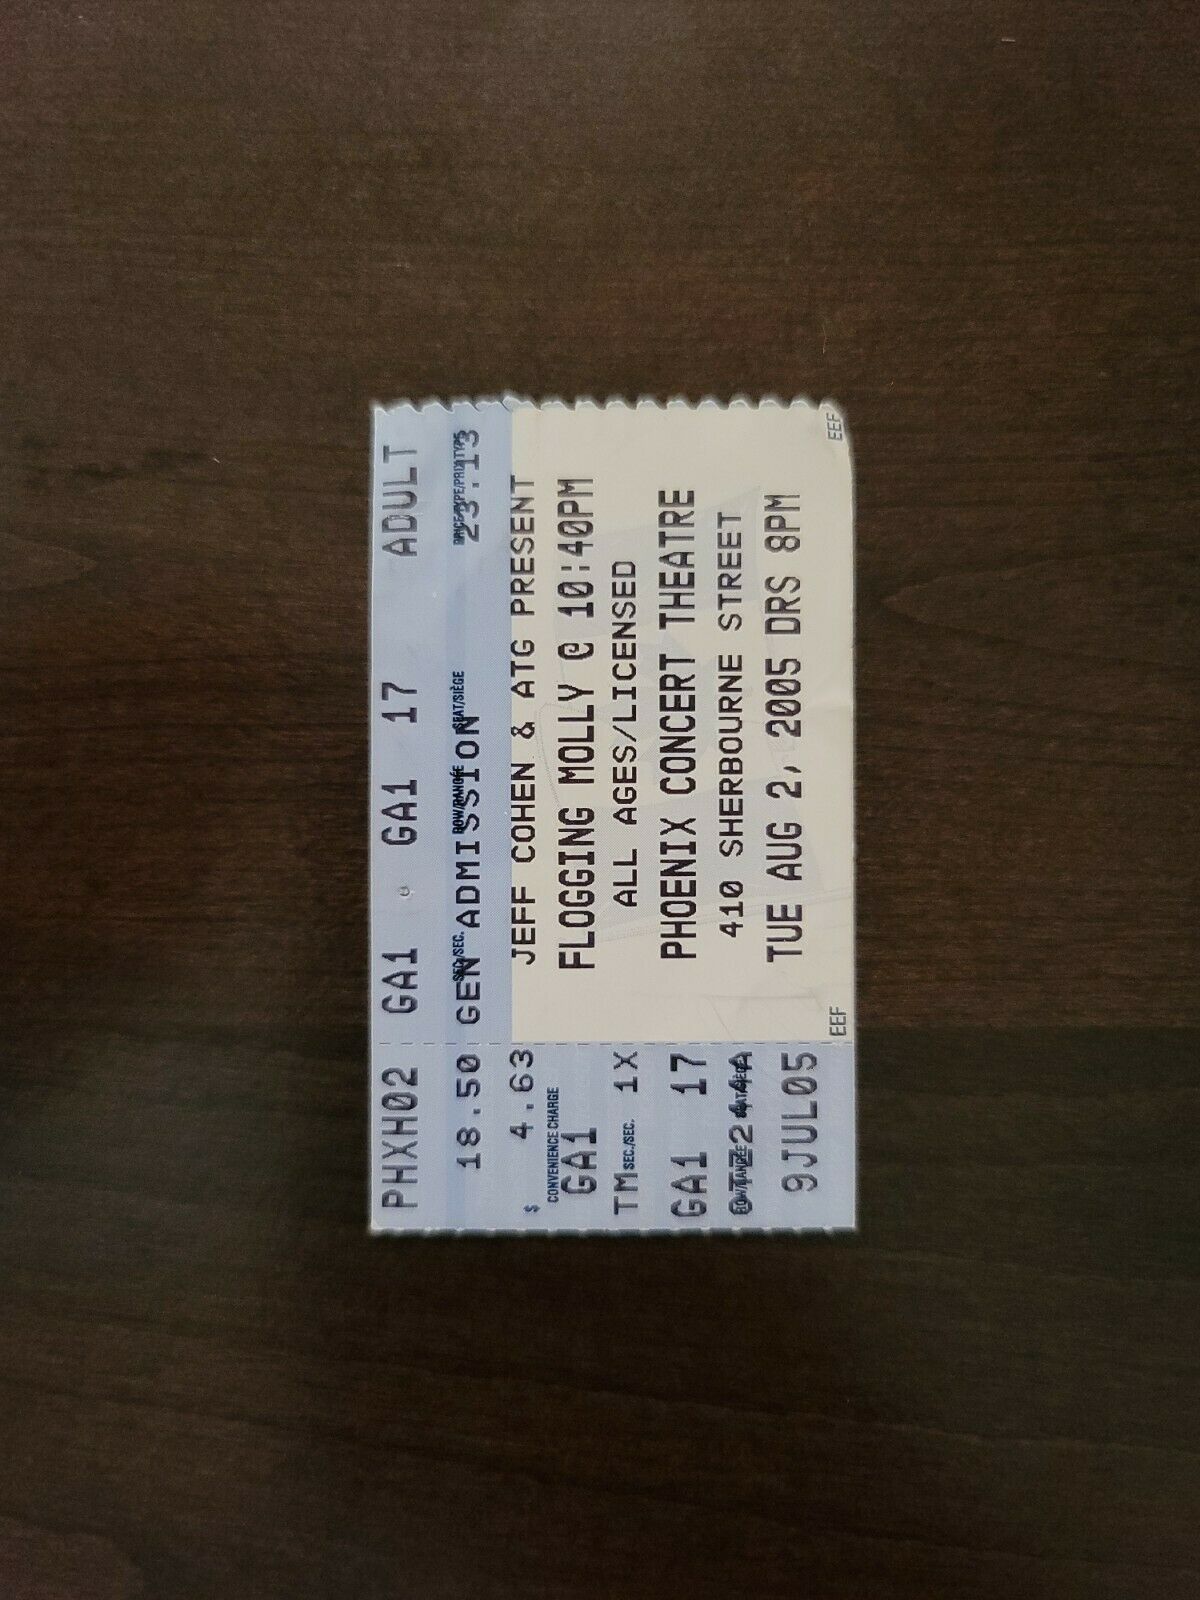 Flogging Molly 2005, Toronto Phoenix Theater Original Concert Ticket Stub